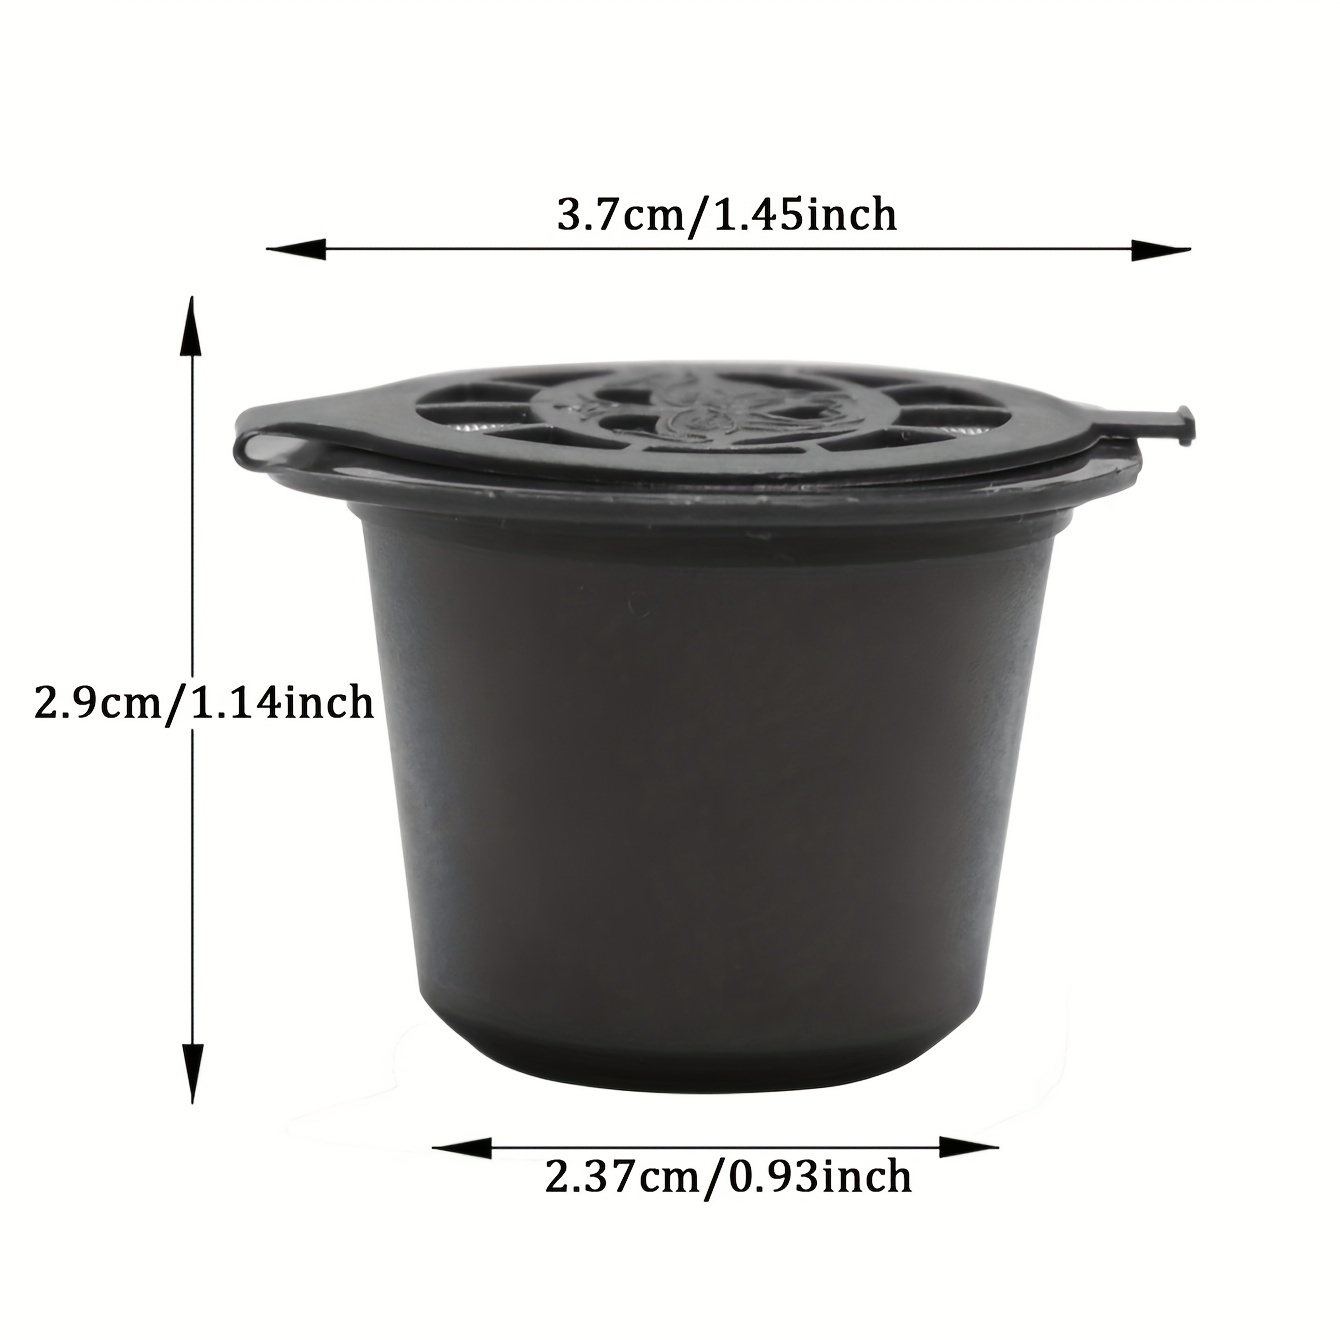 6PCS Refillable Reusable Nespresso Coffee Capsule Reutilisable Nespresso  Pods with a Spoon a Brush